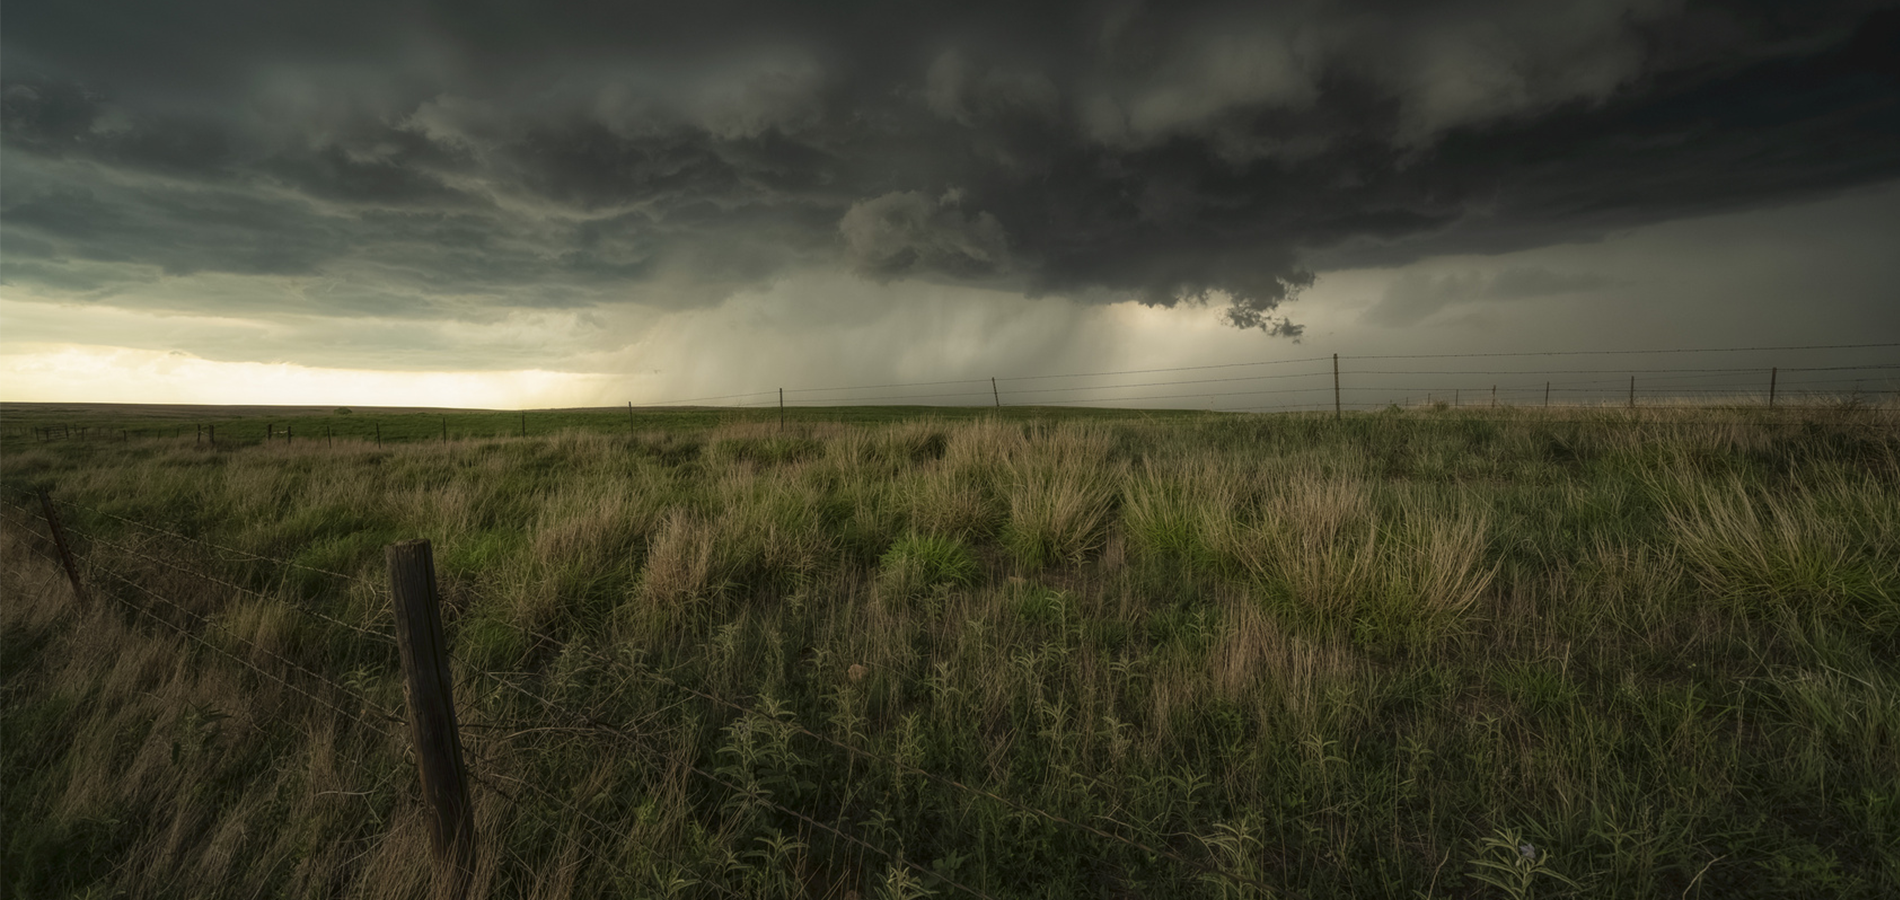 A storm over a pasture